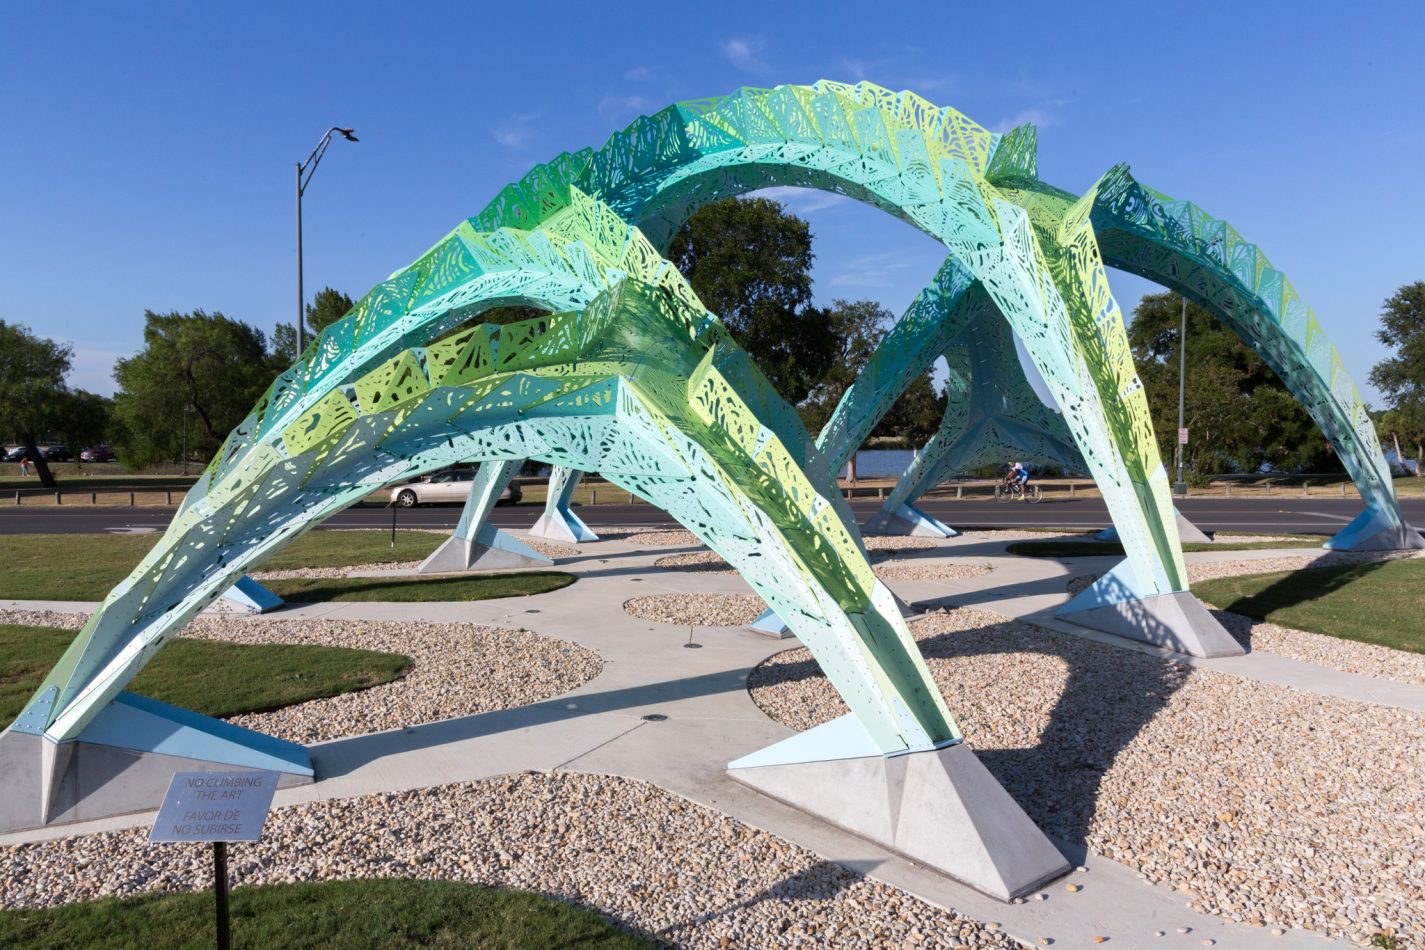 Marc Fornes creates sculptural installation for a Texas park